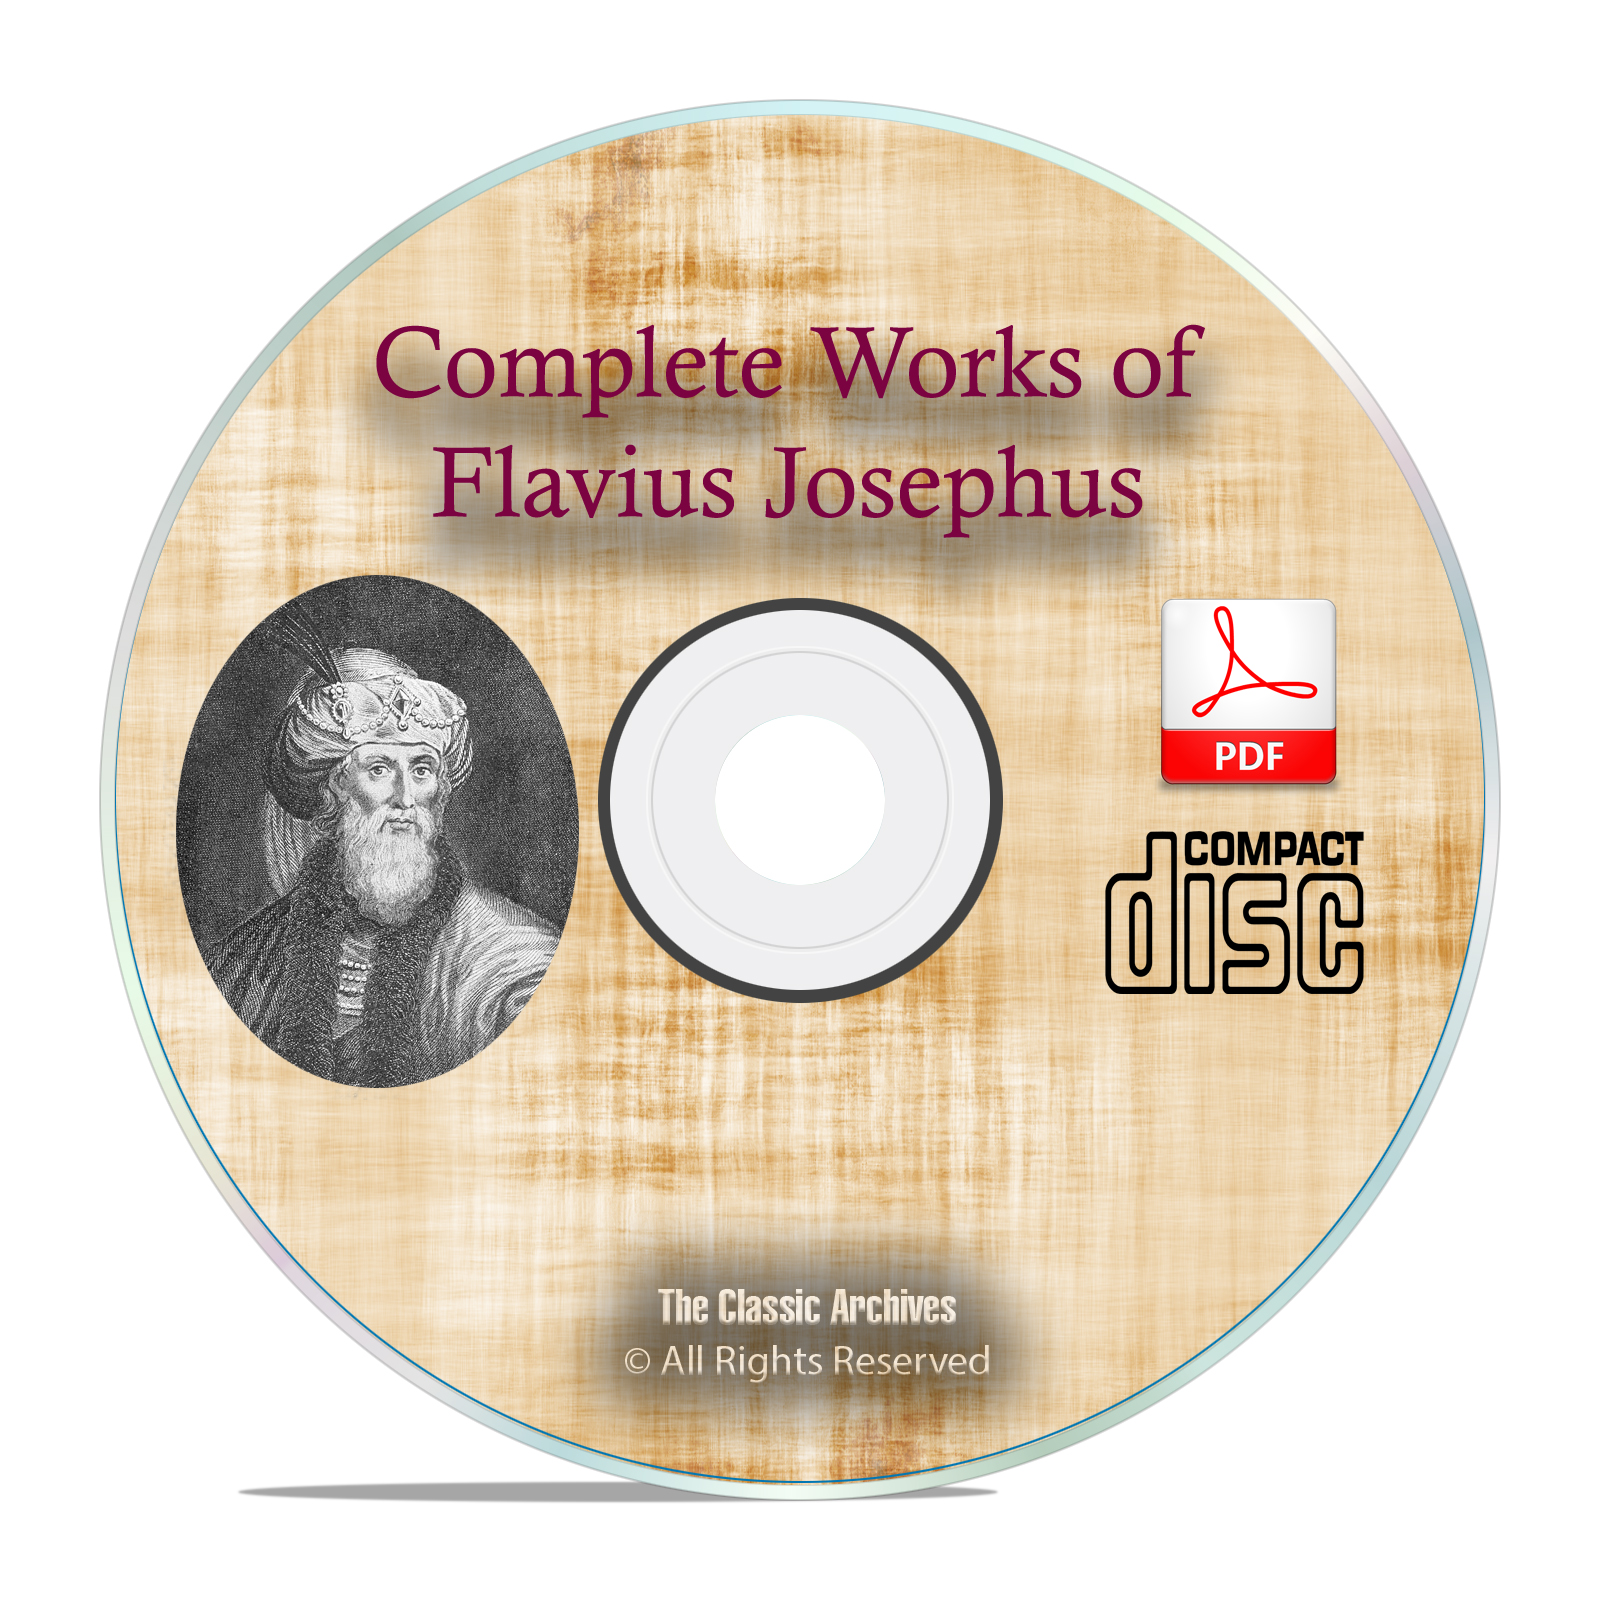 Complete Works, Flavius Josephus, Christian Church History, Jewish PDF CD